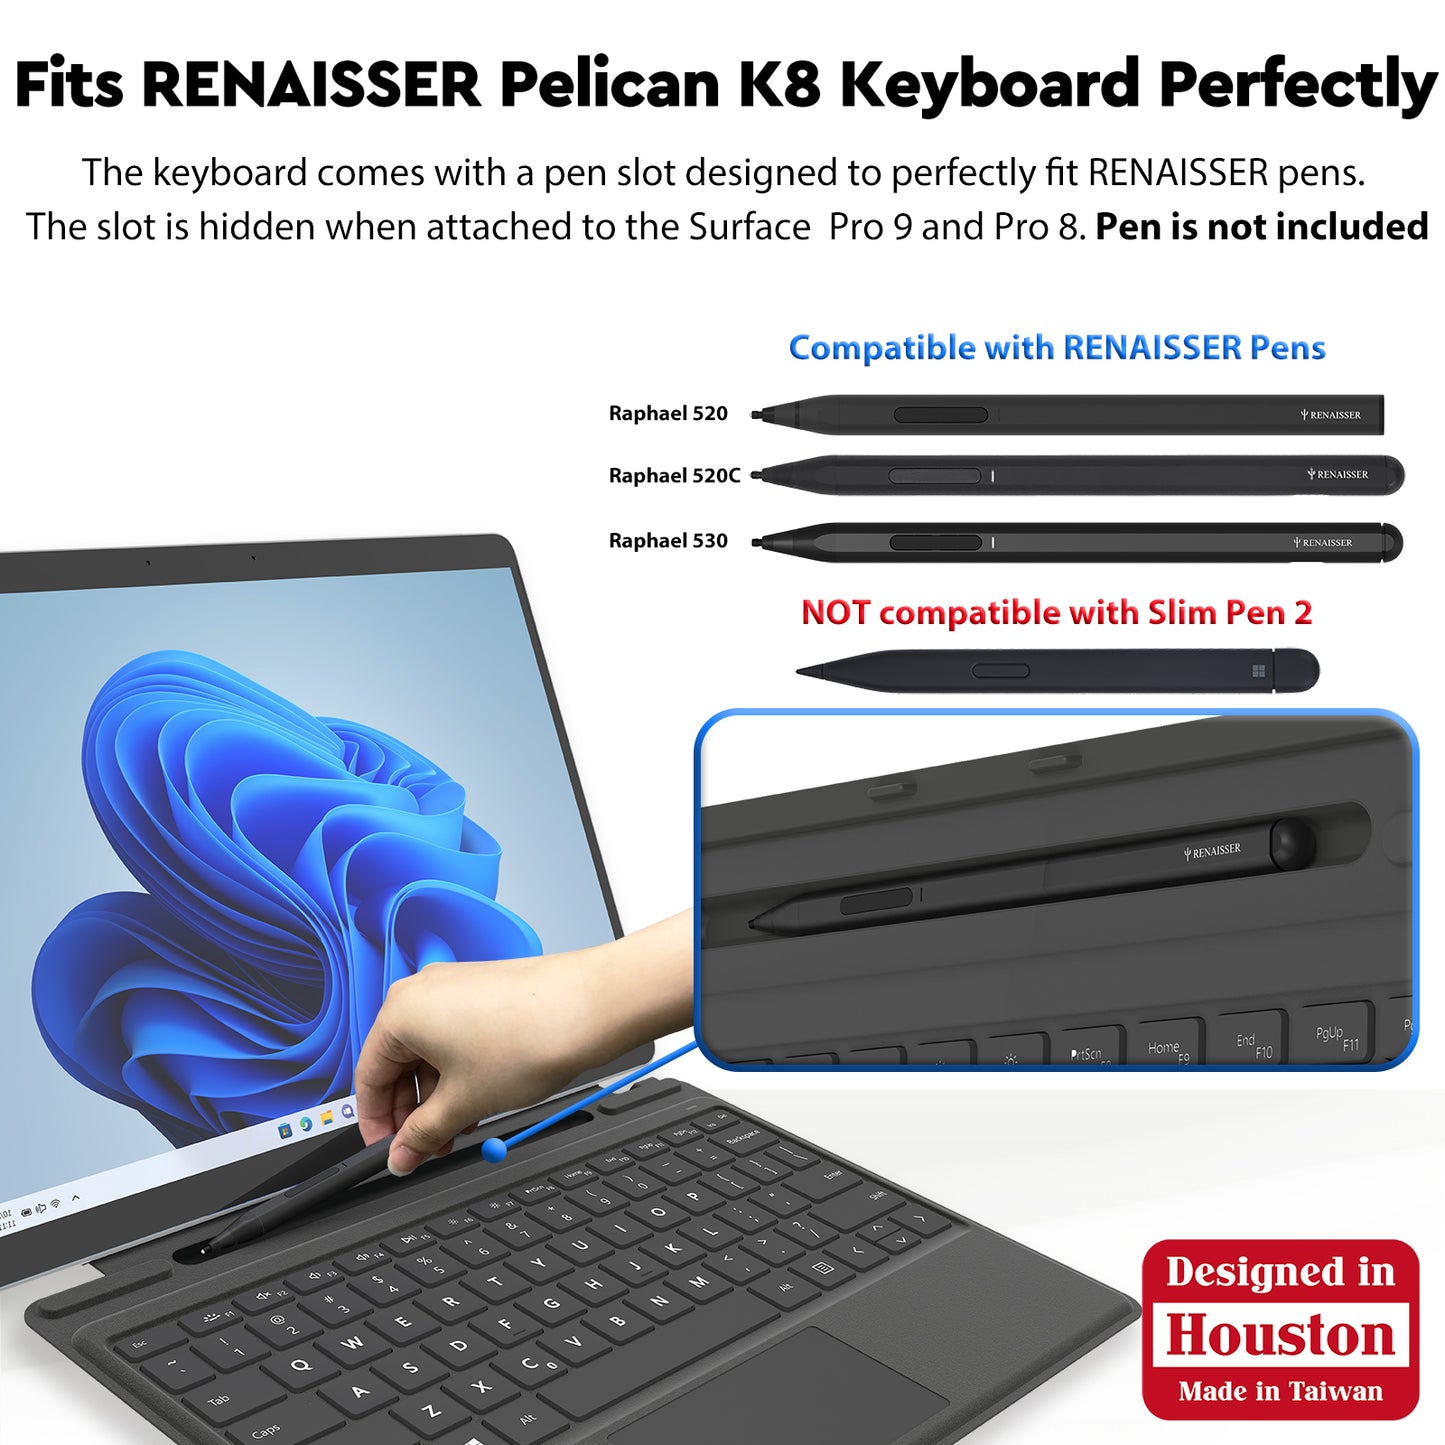 Pelican K8 Keyboard and Raphael 530 Combo